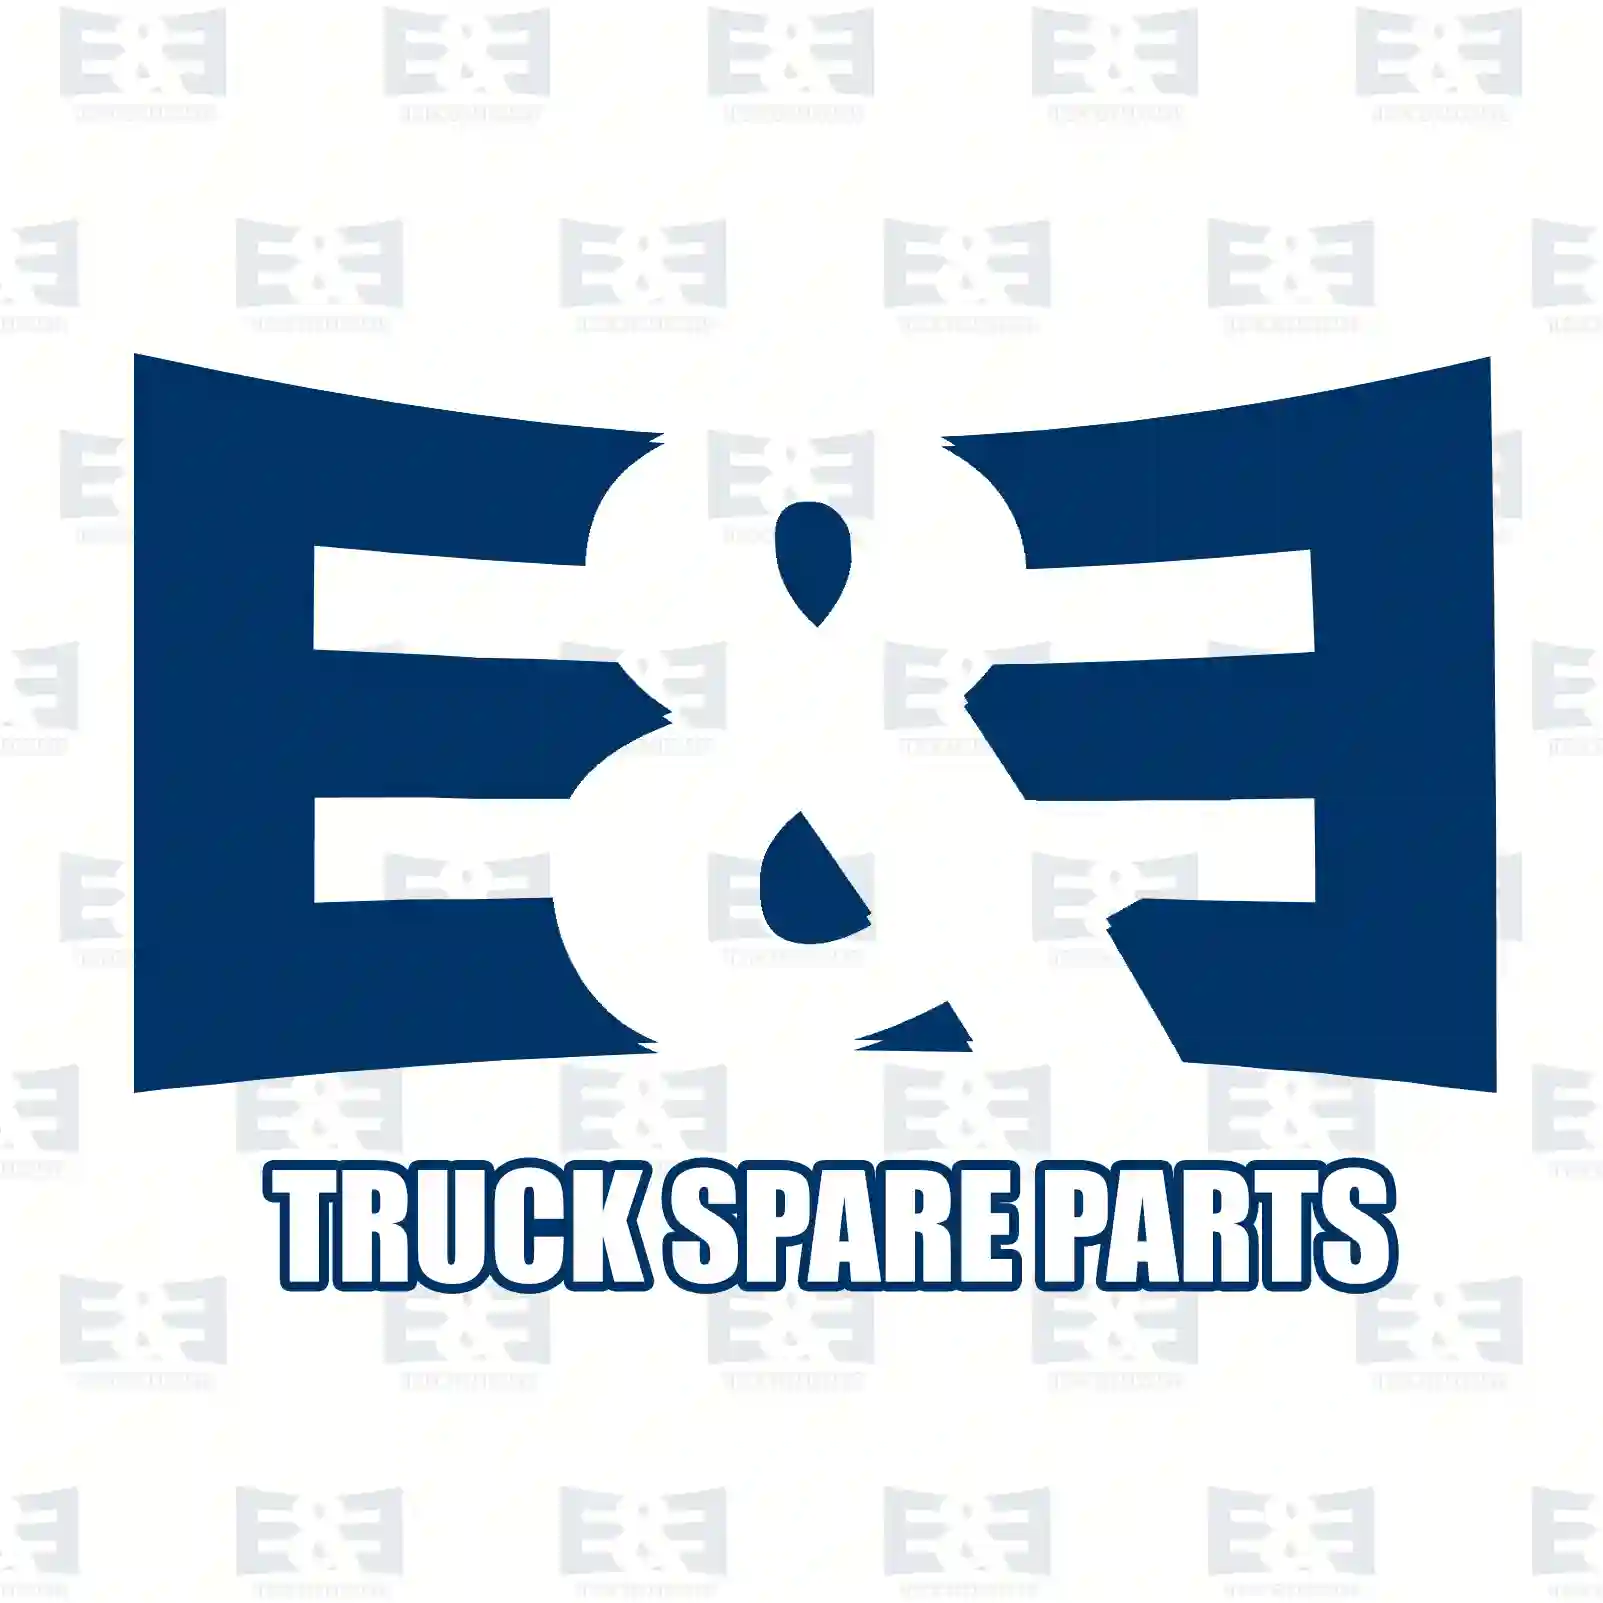 Drum brake lining kit, axle kit - oversize, 2E2293004, 5001860032S1, 5001860033, , ||  2E2293004 E&E Truck Spare Parts | Truck Spare Parts, Auotomotive Spare Parts Drum brake lining kit, axle kit - oversize, 2E2293004, 5001860032S1, 5001860033, , ||  2E2293004 E&E Truck Spare Parts | Truck Spare Parts, Auotomotive Spare Parts